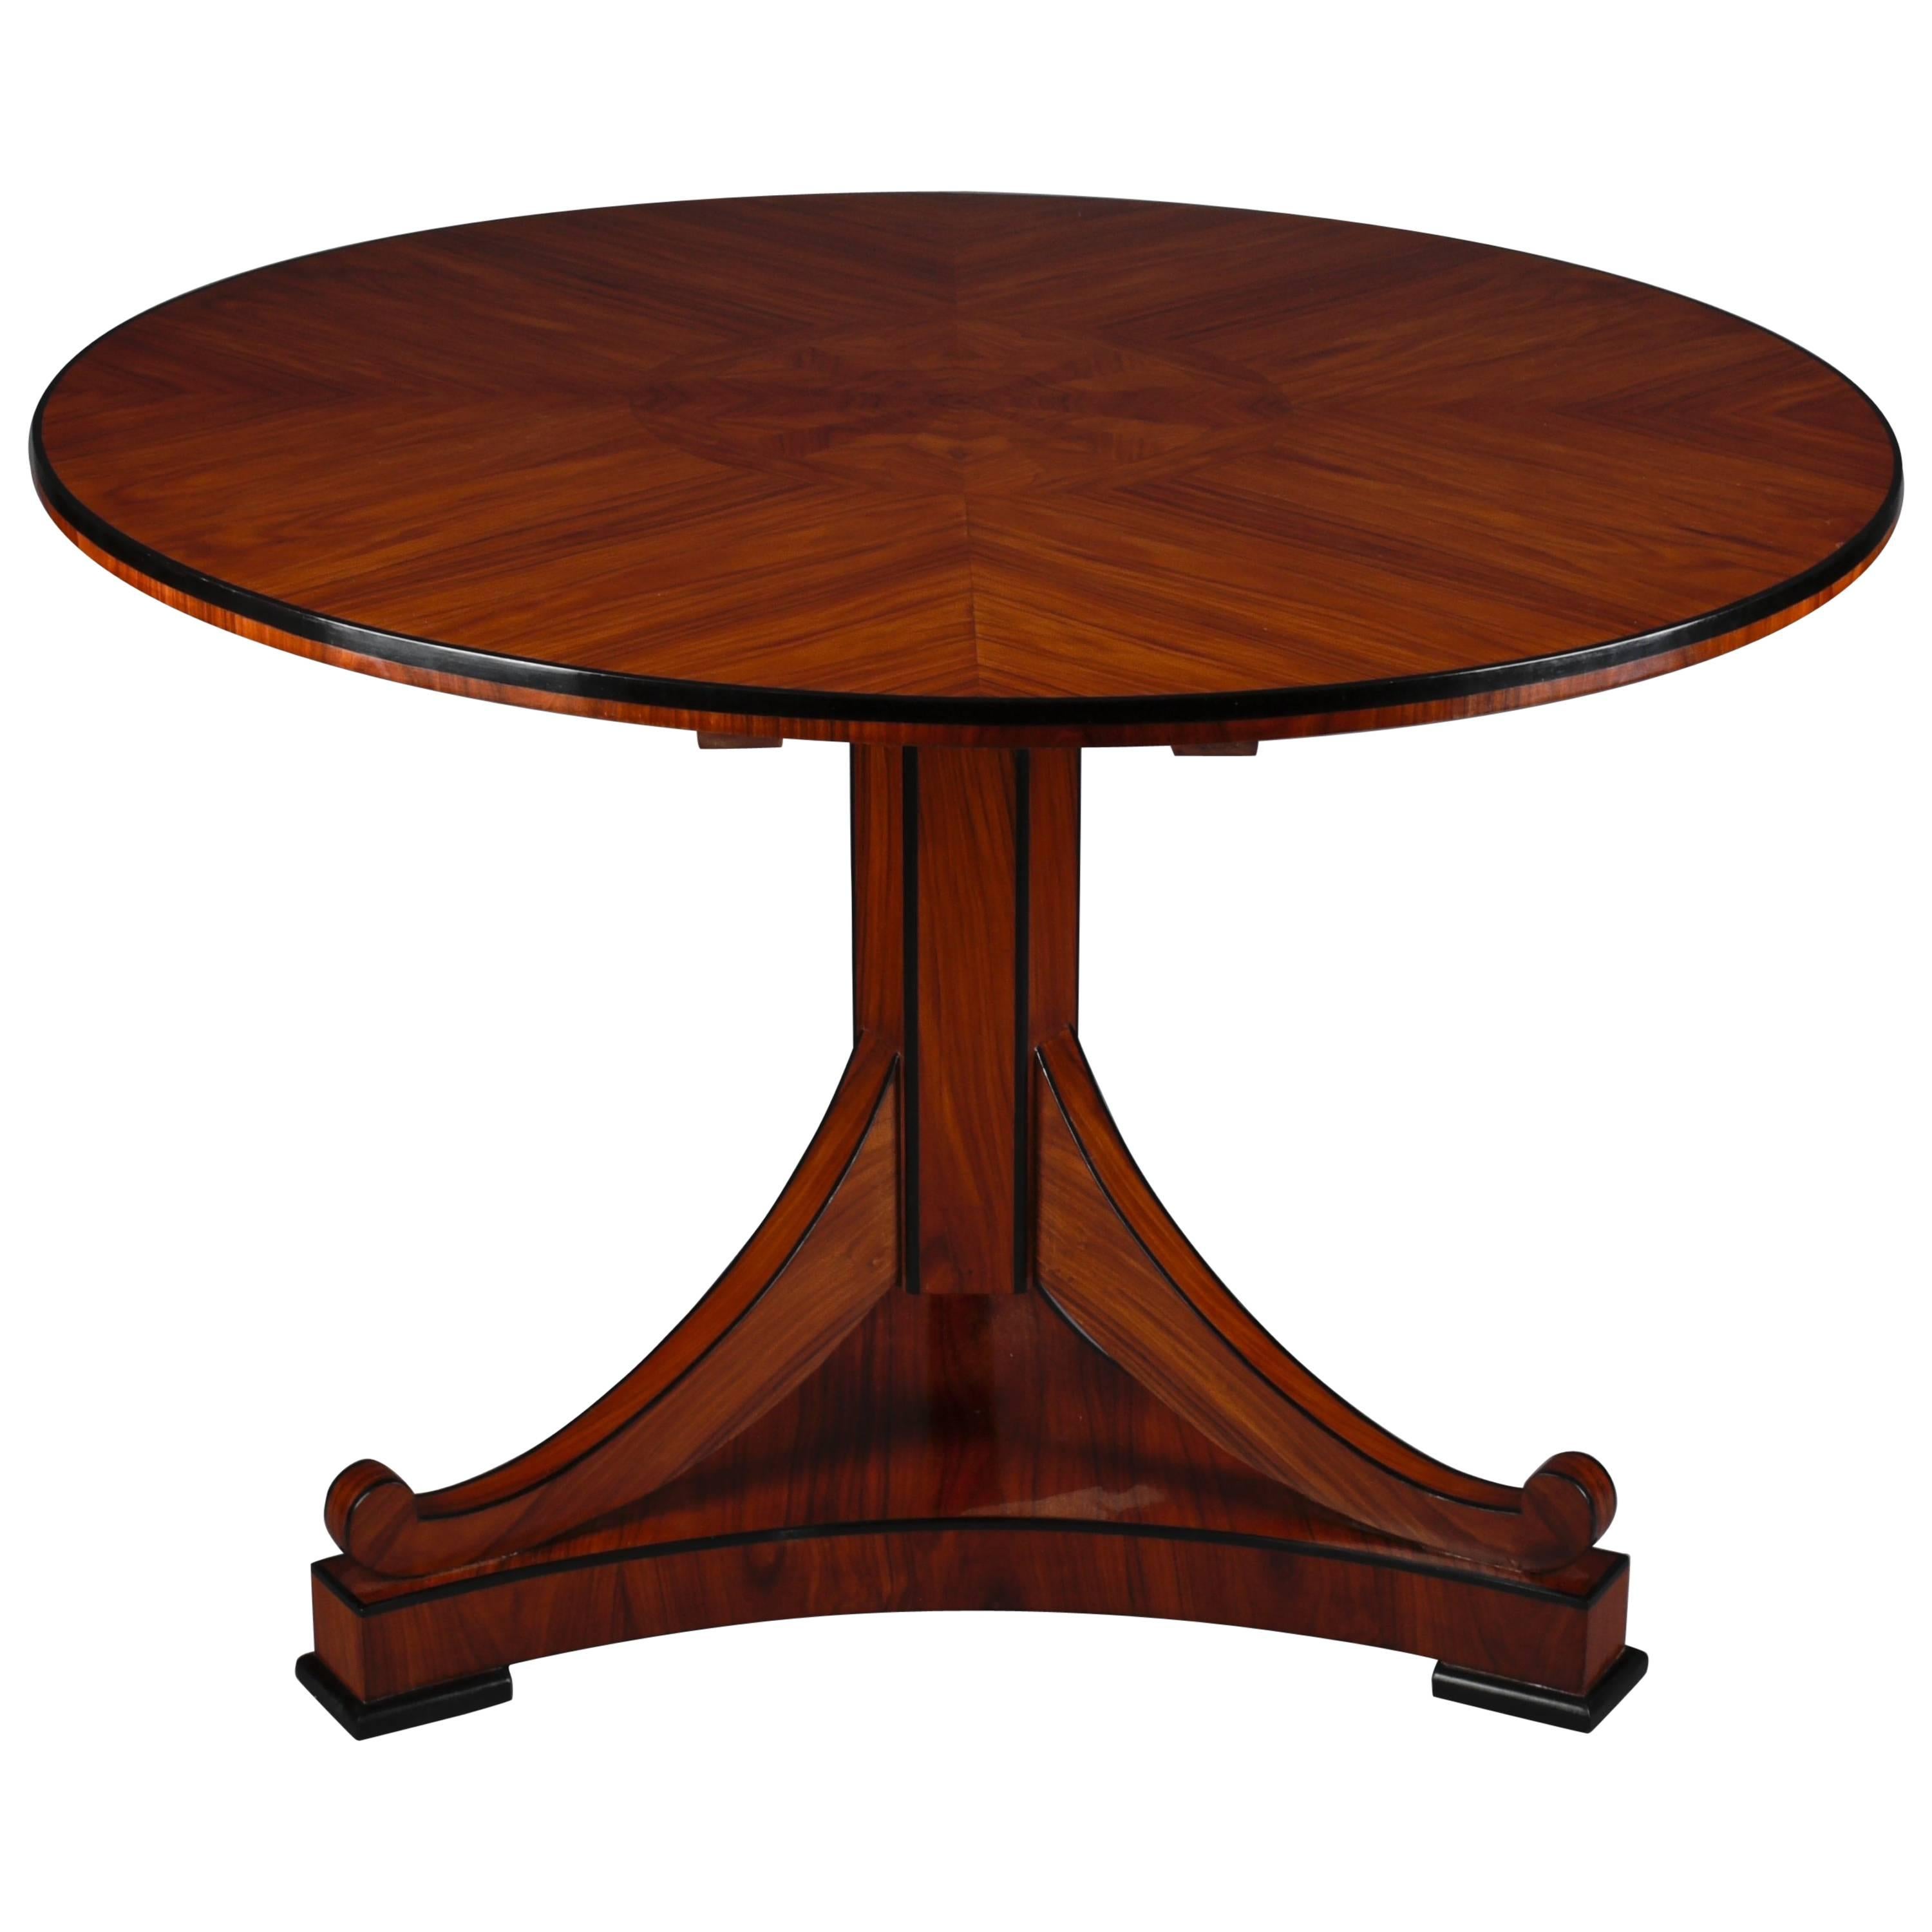 Round Folding Table in the Biedermeier Style